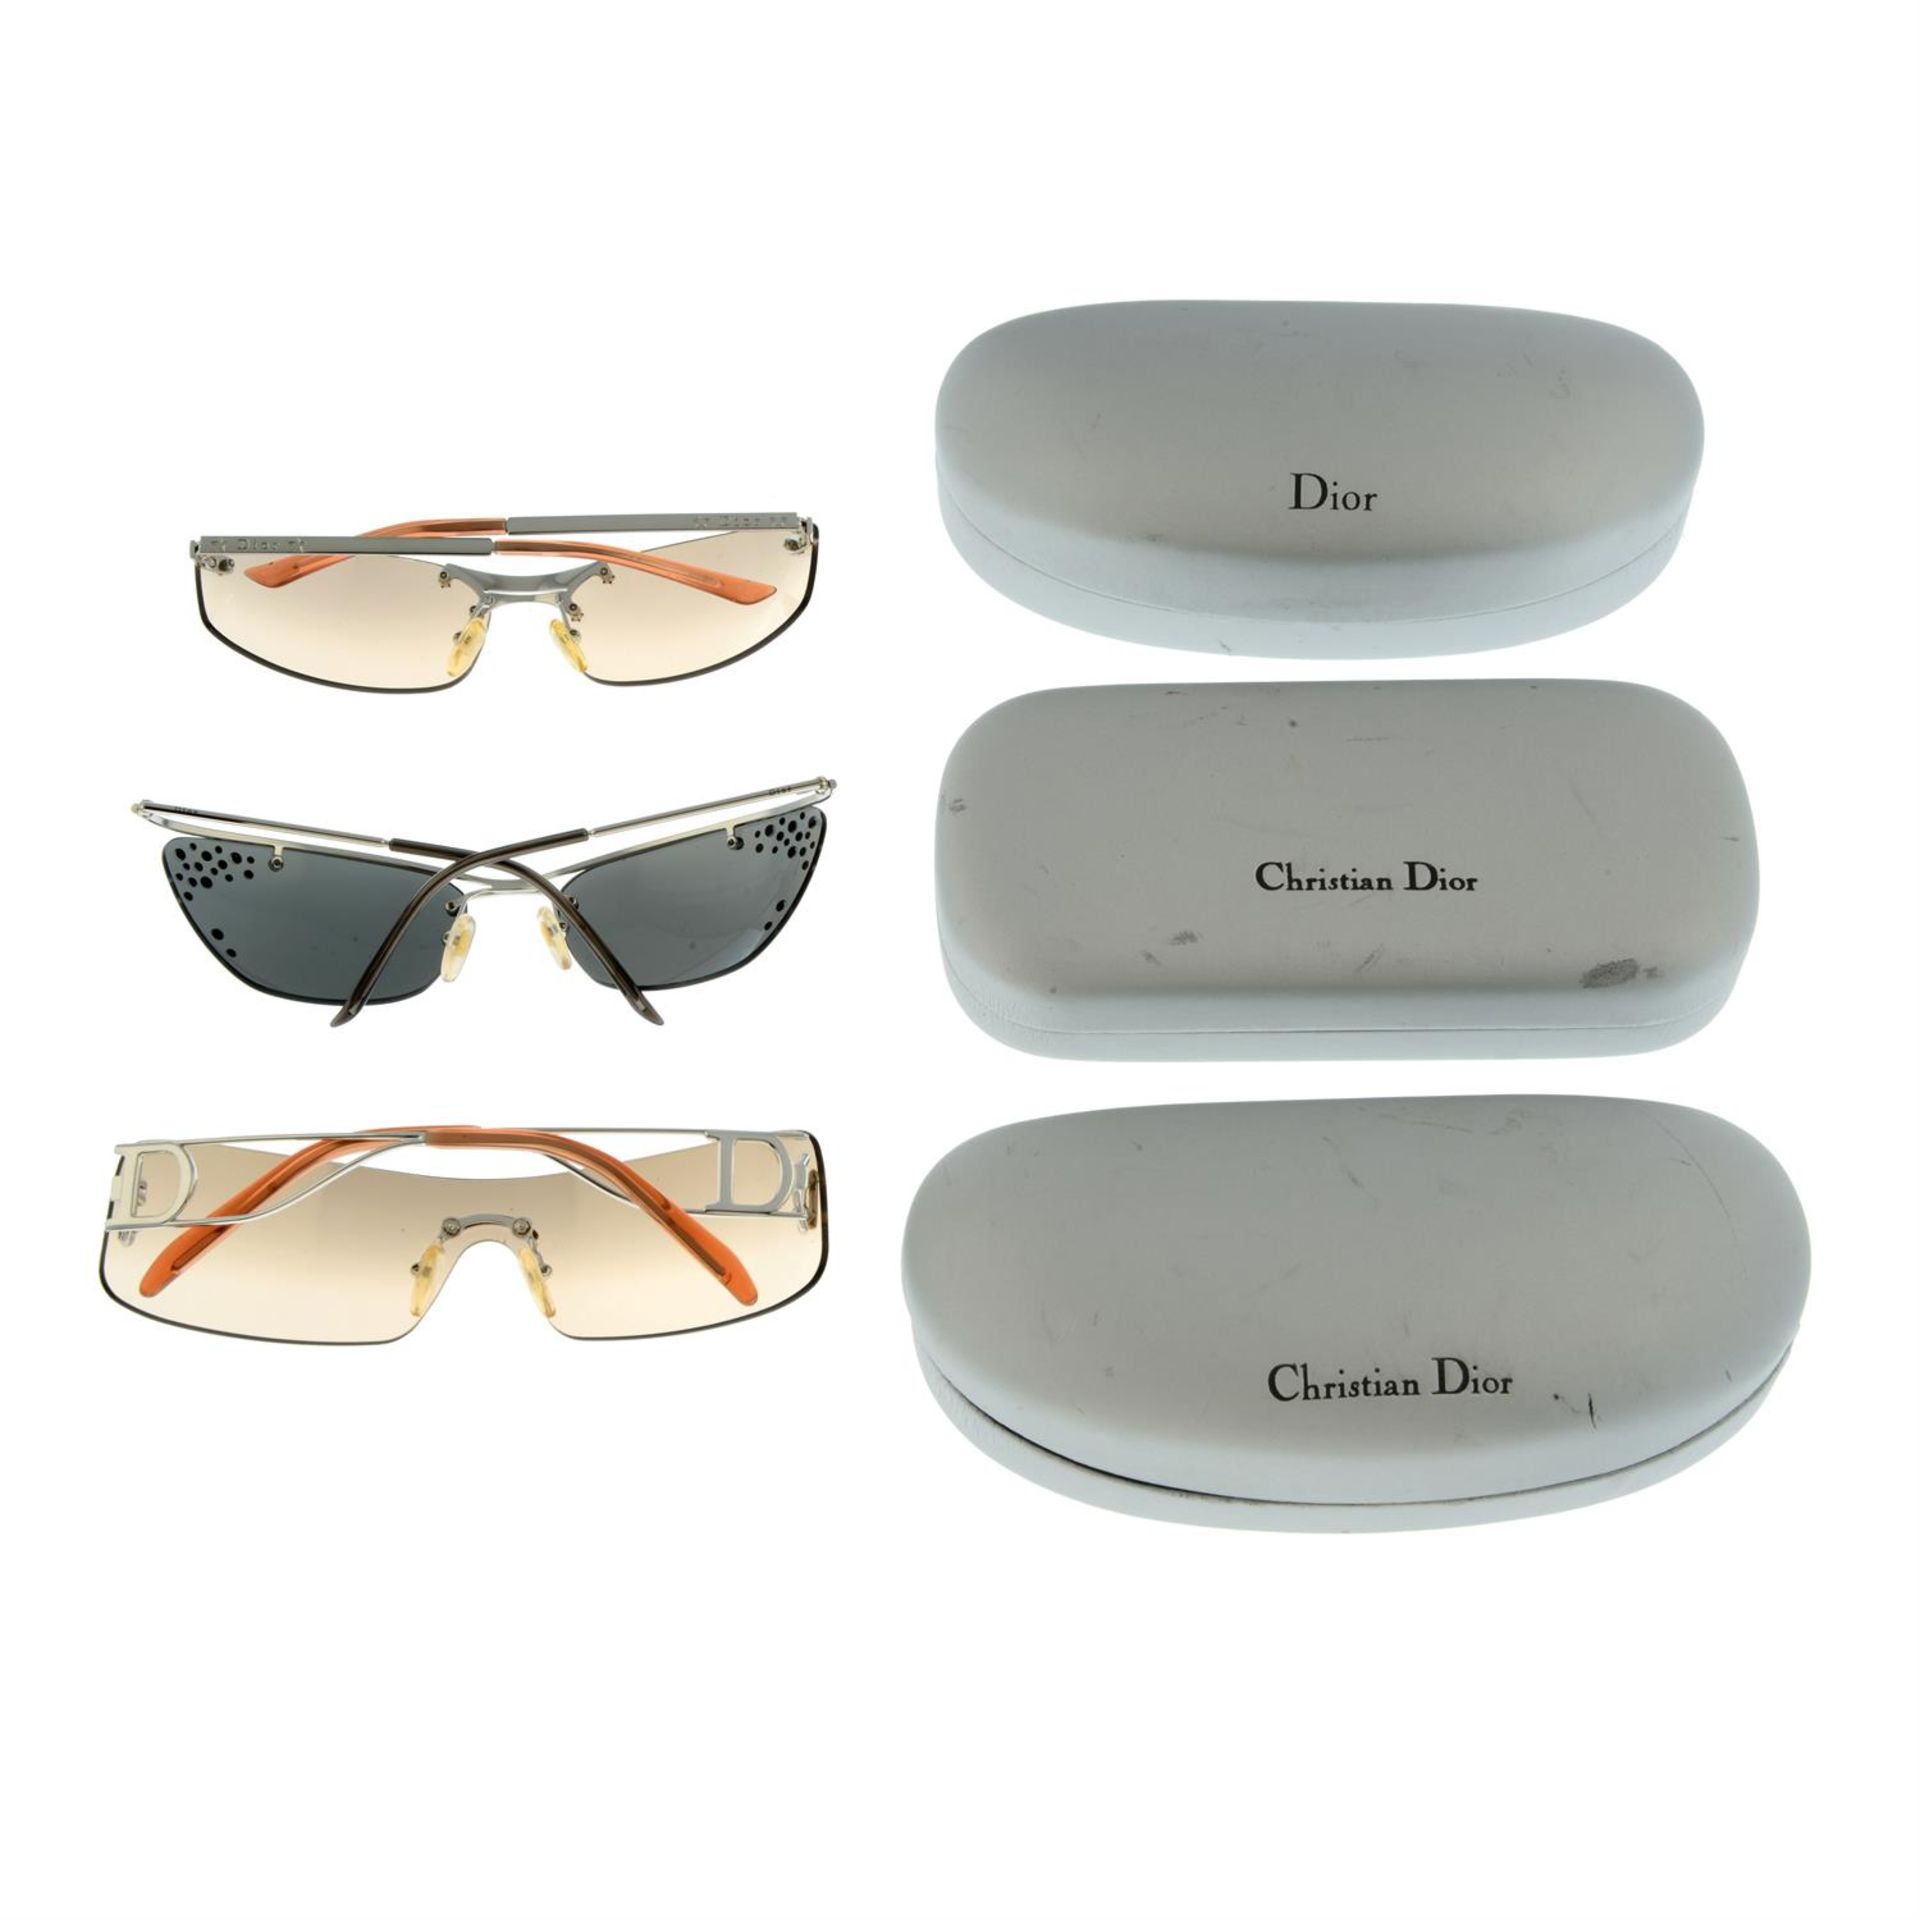 CHRISTIAN DIOR - three pairs of sunglasses. - Bild 2 aus 2